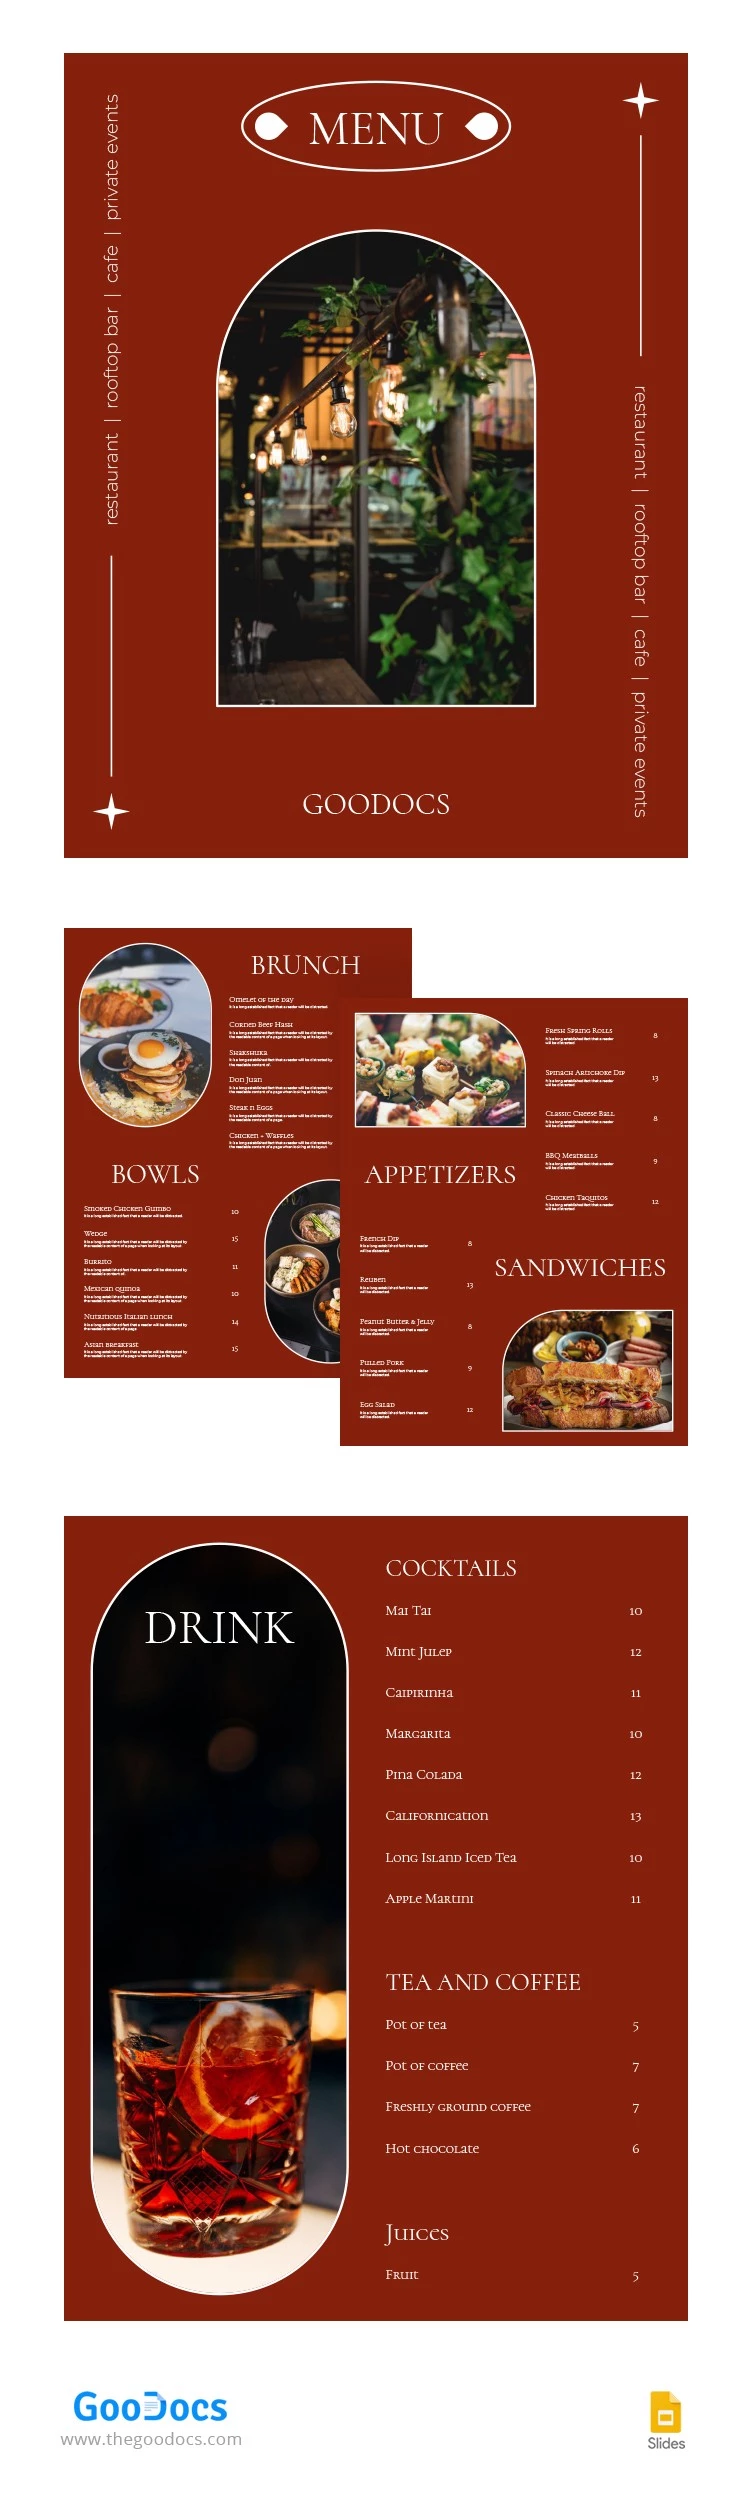 Menu del ristorante moderno rosso - free Google Docs Template - 10063745